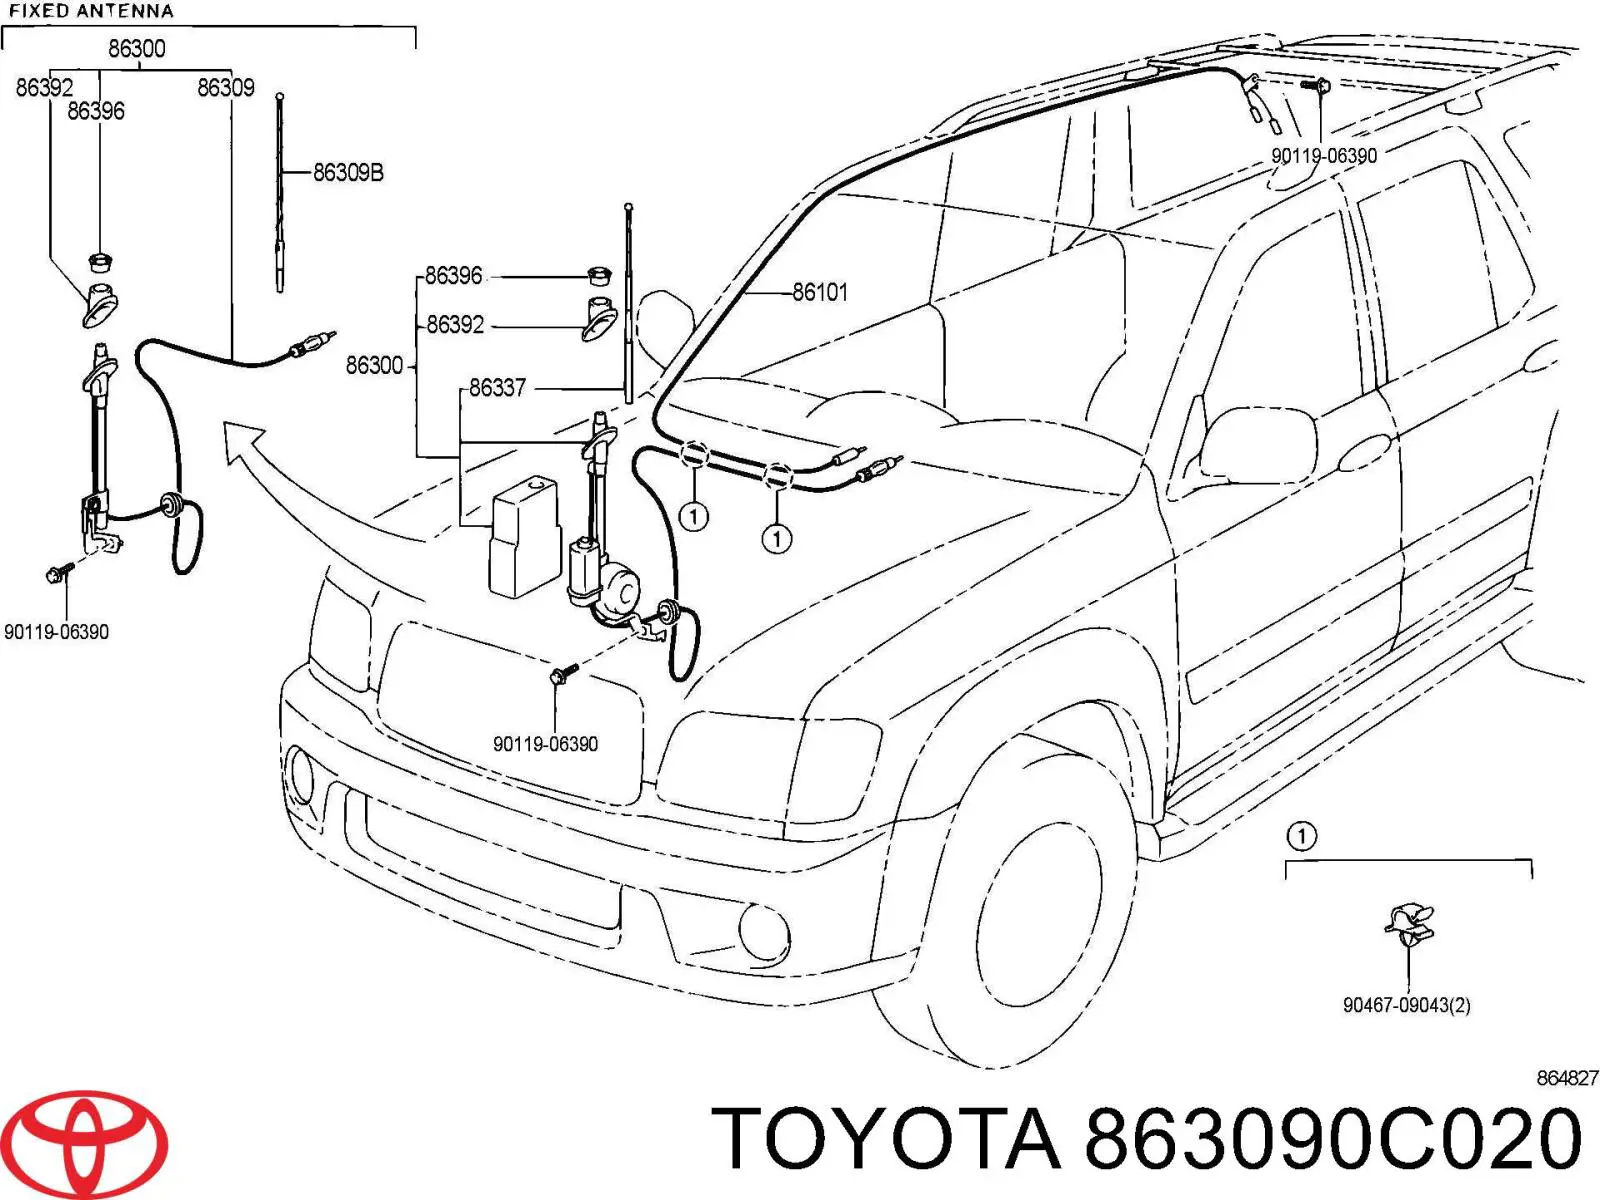 Barra de antena para Toyota Fj Cruiser 